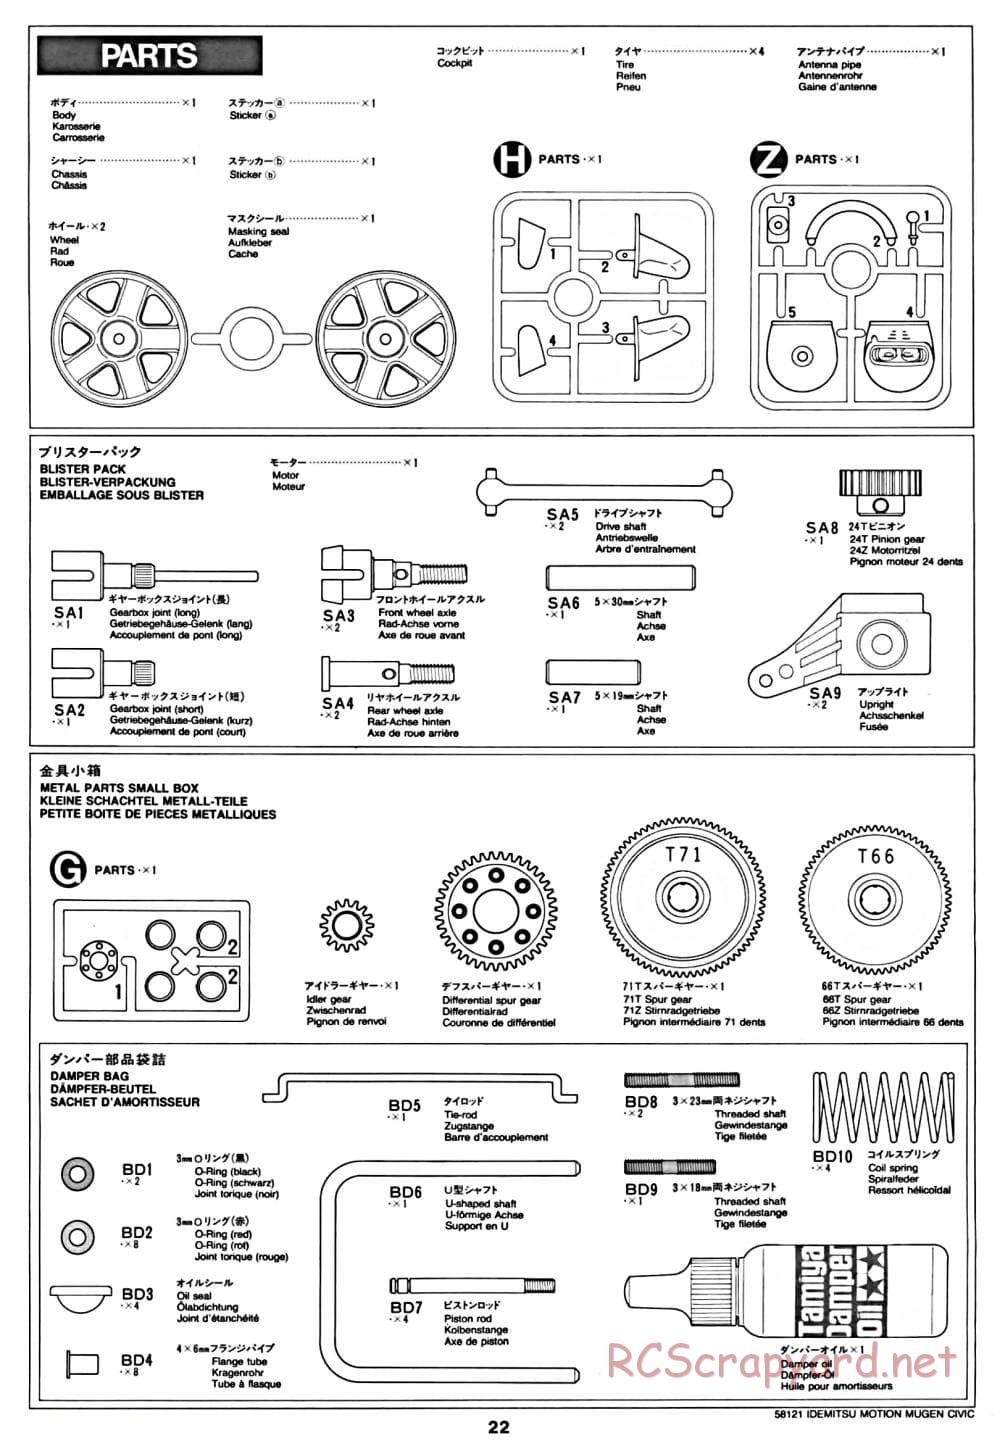 Tamiya - Idemitsu Motion Mugen Civic - FF-01 Chassis - Manual - Page 22